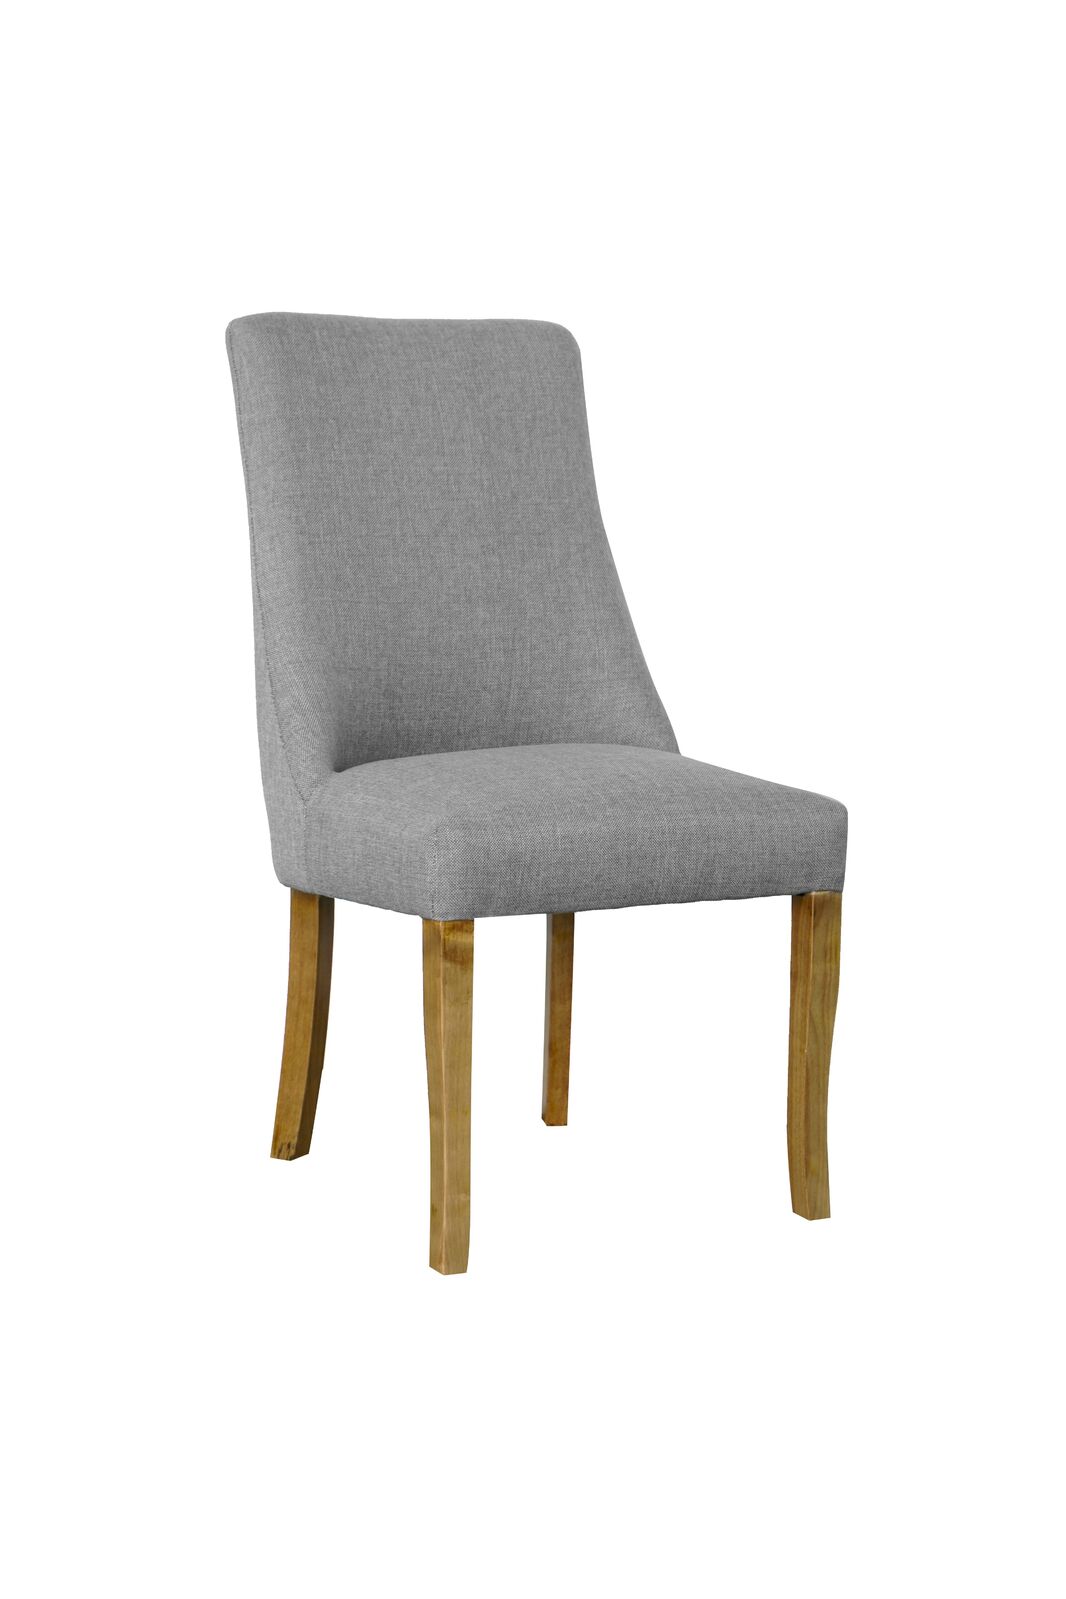 Homefurn Dining Chair Timber Padded Fabric Seat Rosa 1511 RFS